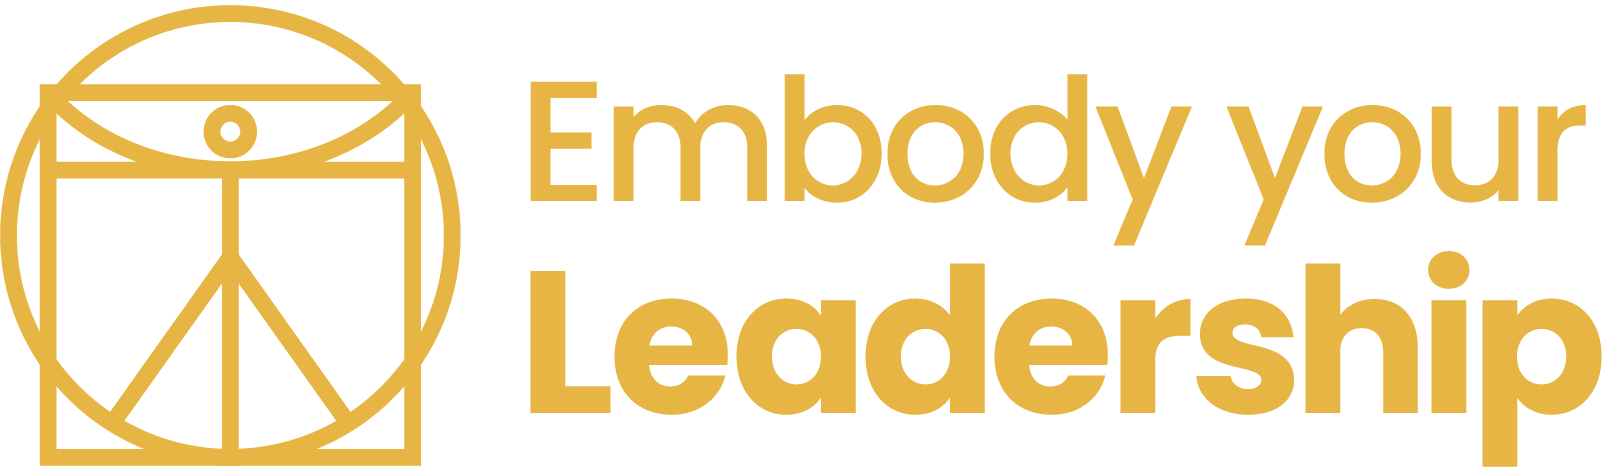 Embody your Leadership